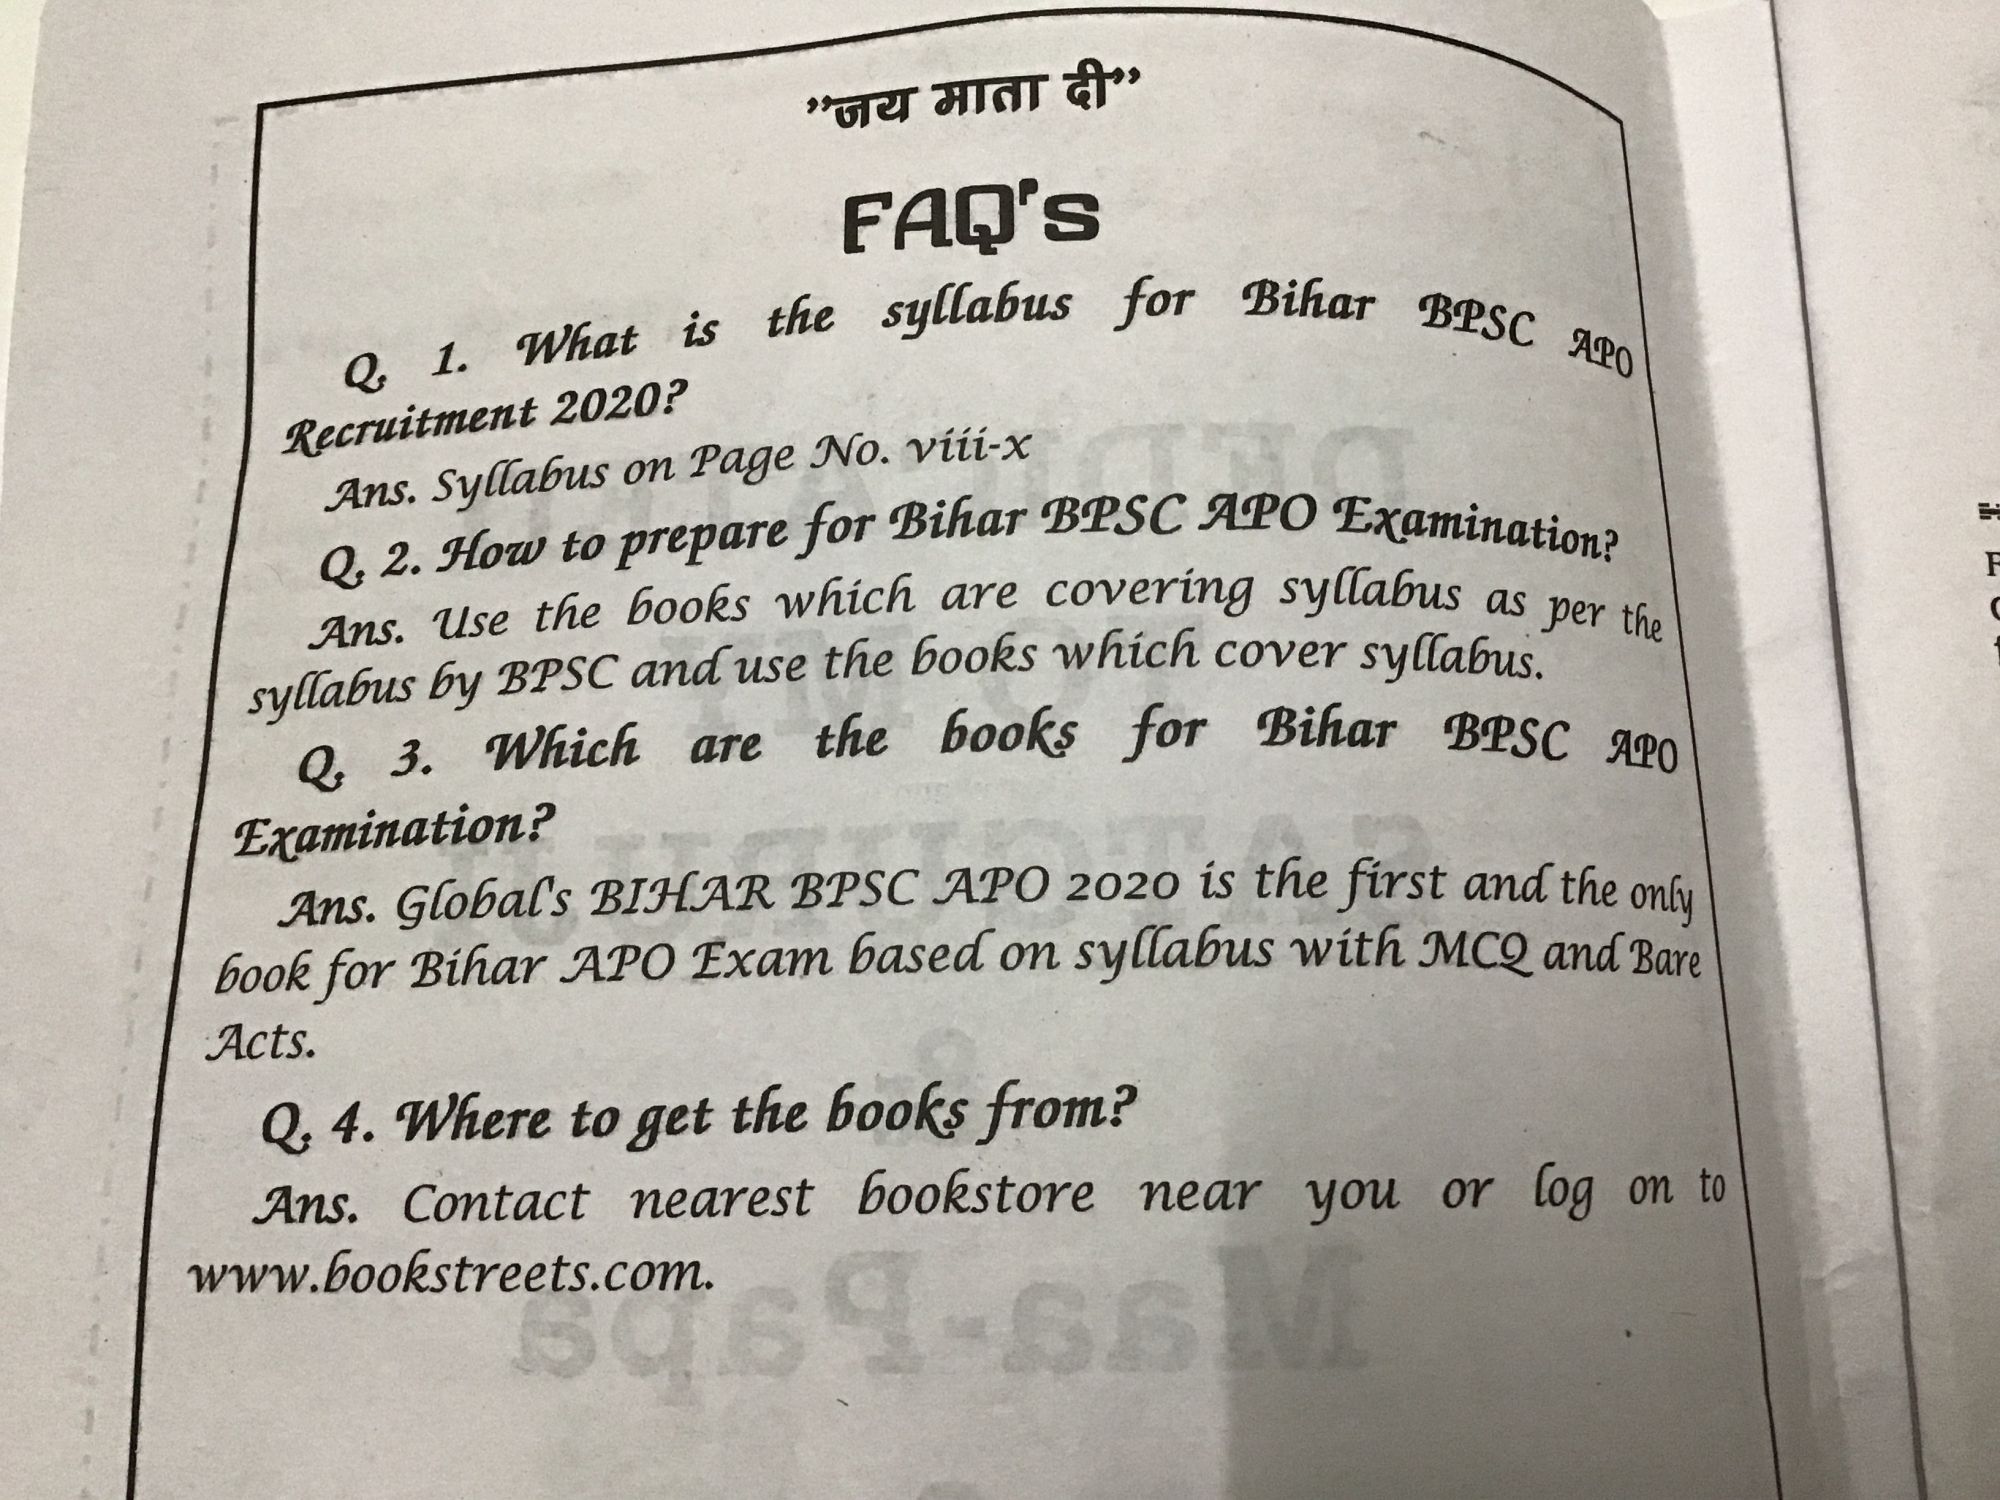 Bihar BPSC APO Exam Book In English For 2020